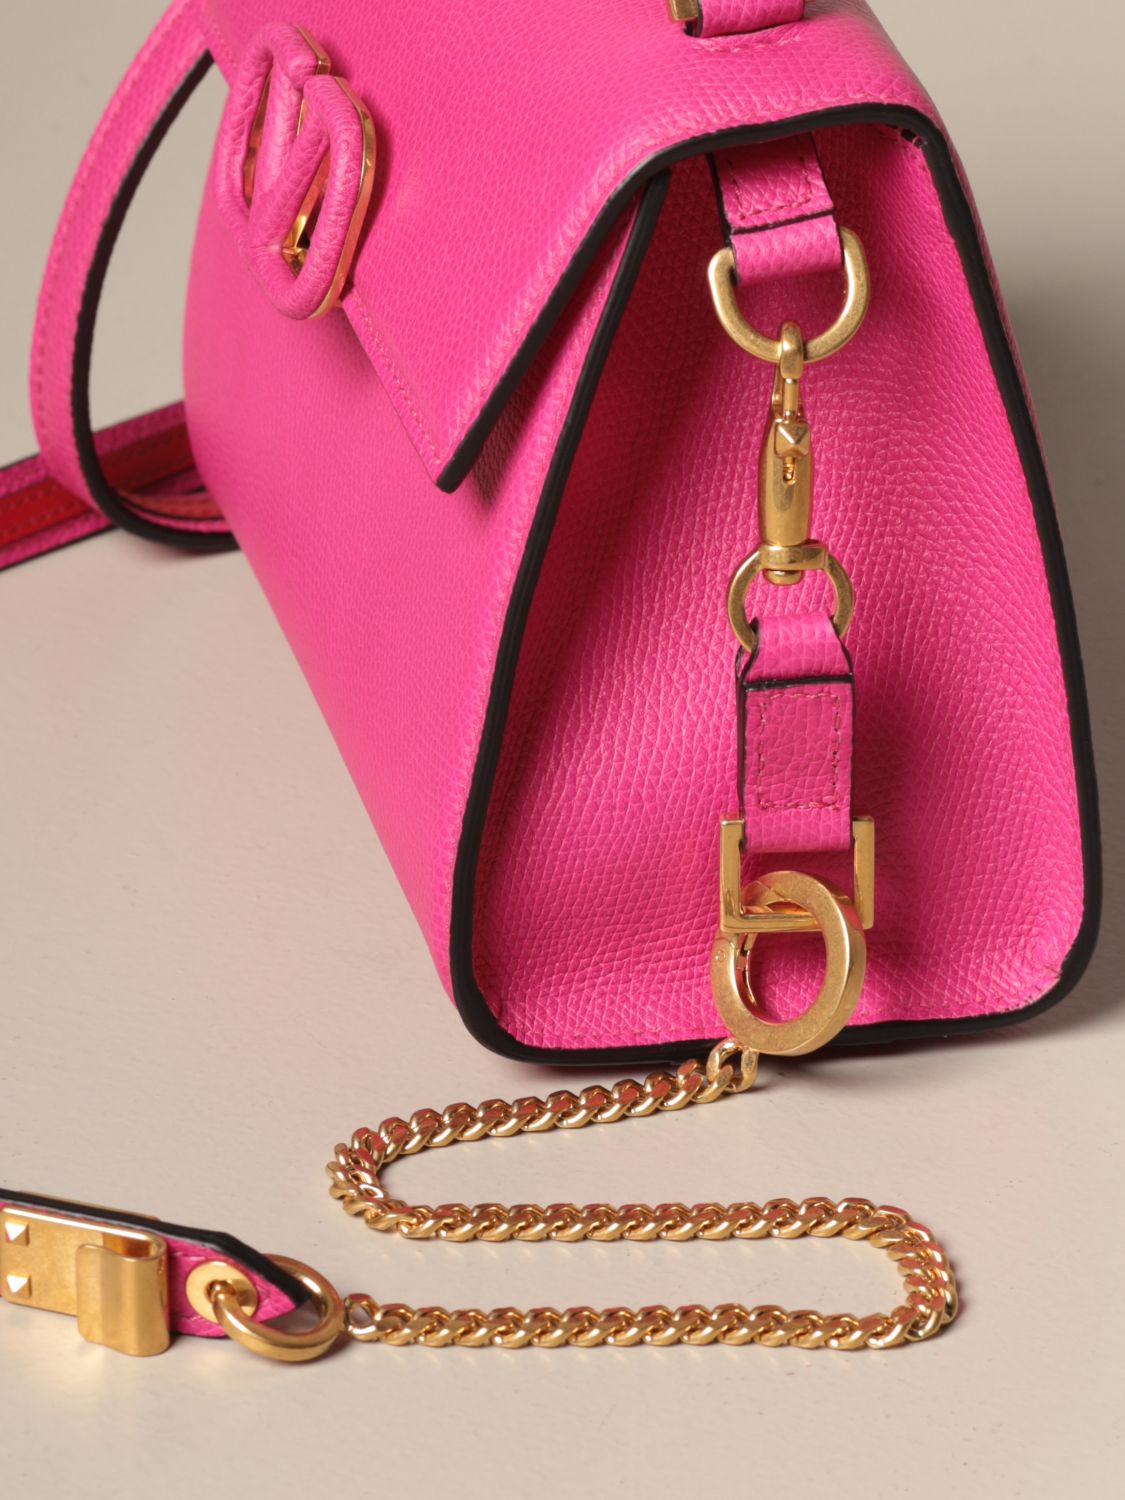 Vsling leather handbag Valentino Garavani Pink in Leather - 21037488